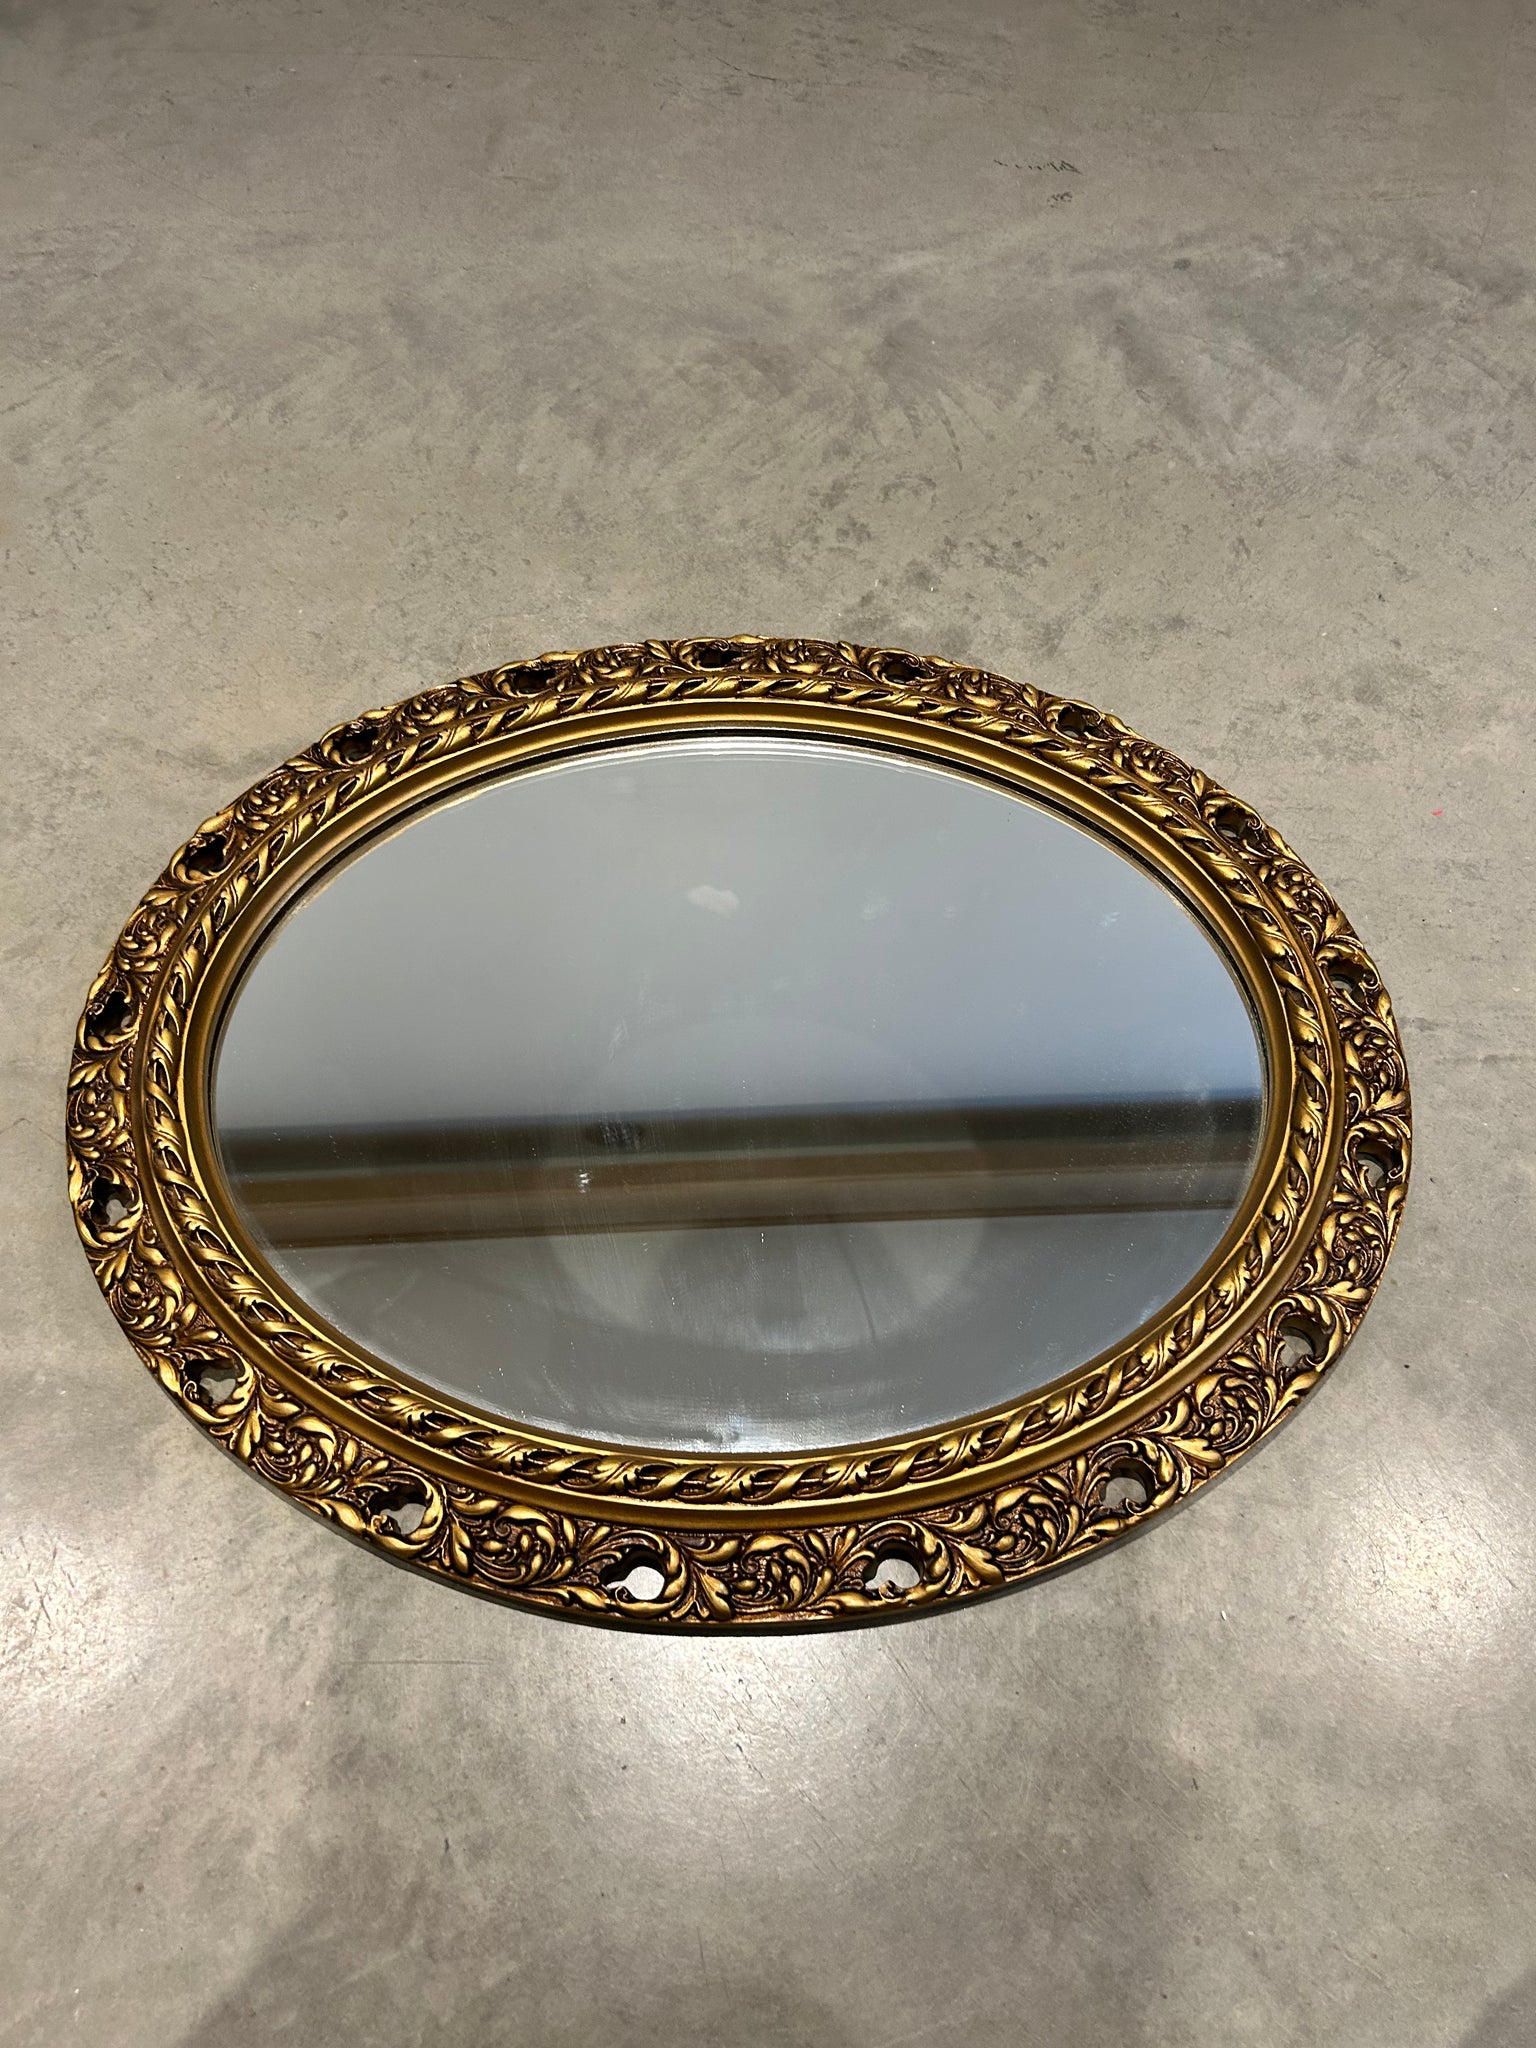 Antique ornate golden oval mirror